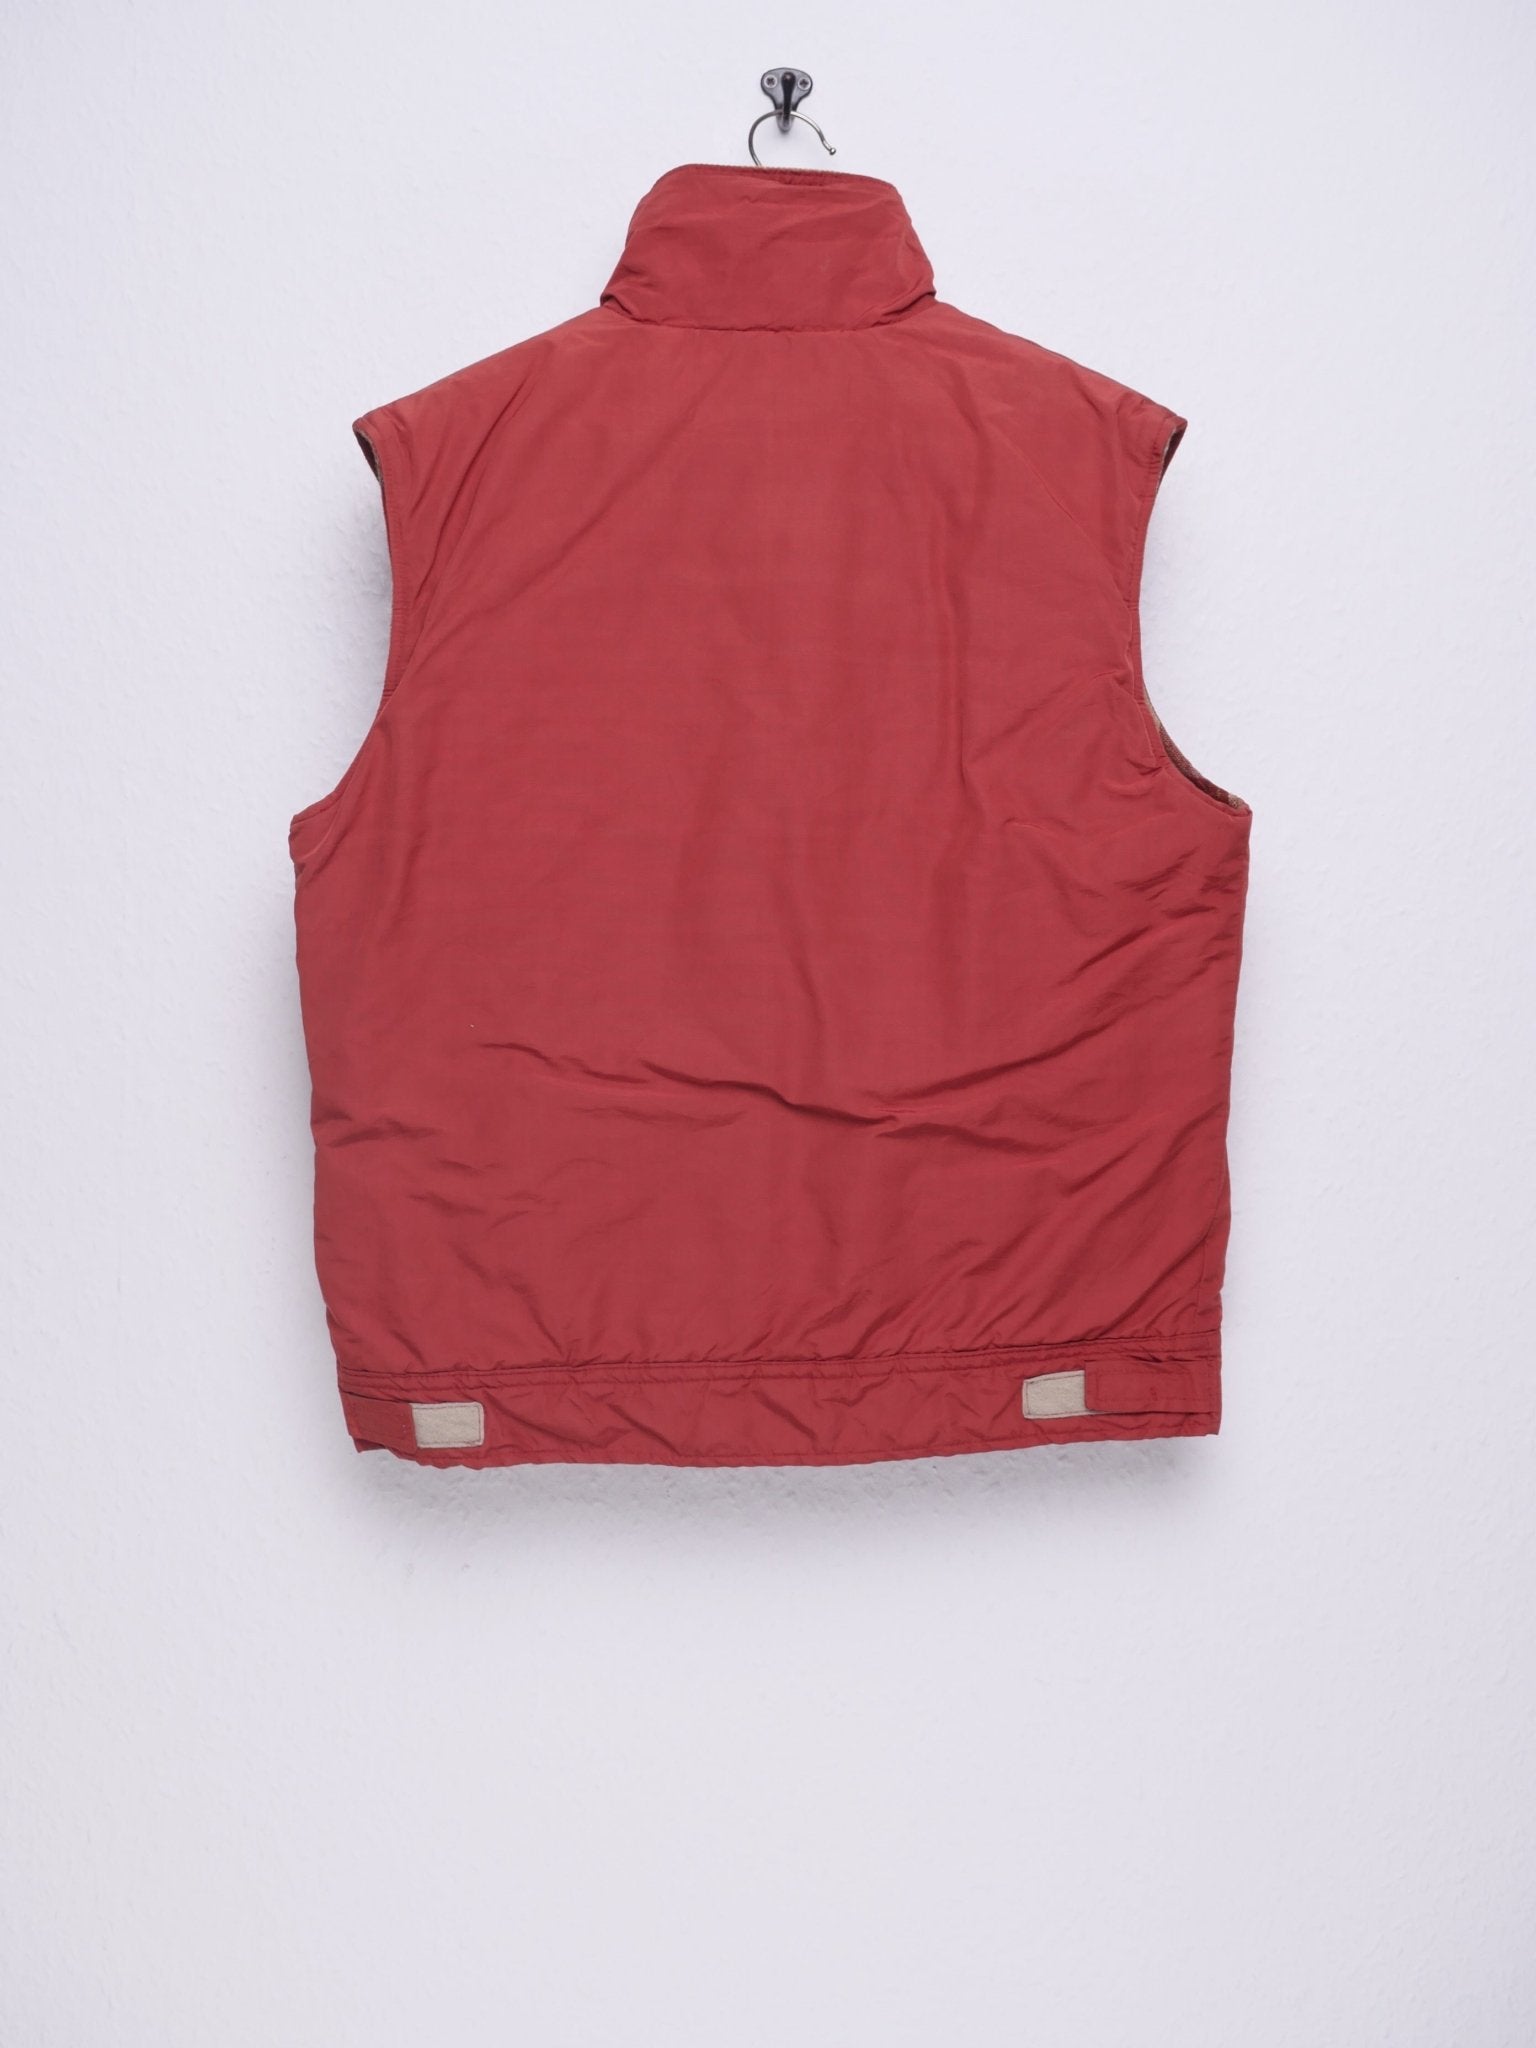 Vintage plain basic Vest Jacke - Peeces